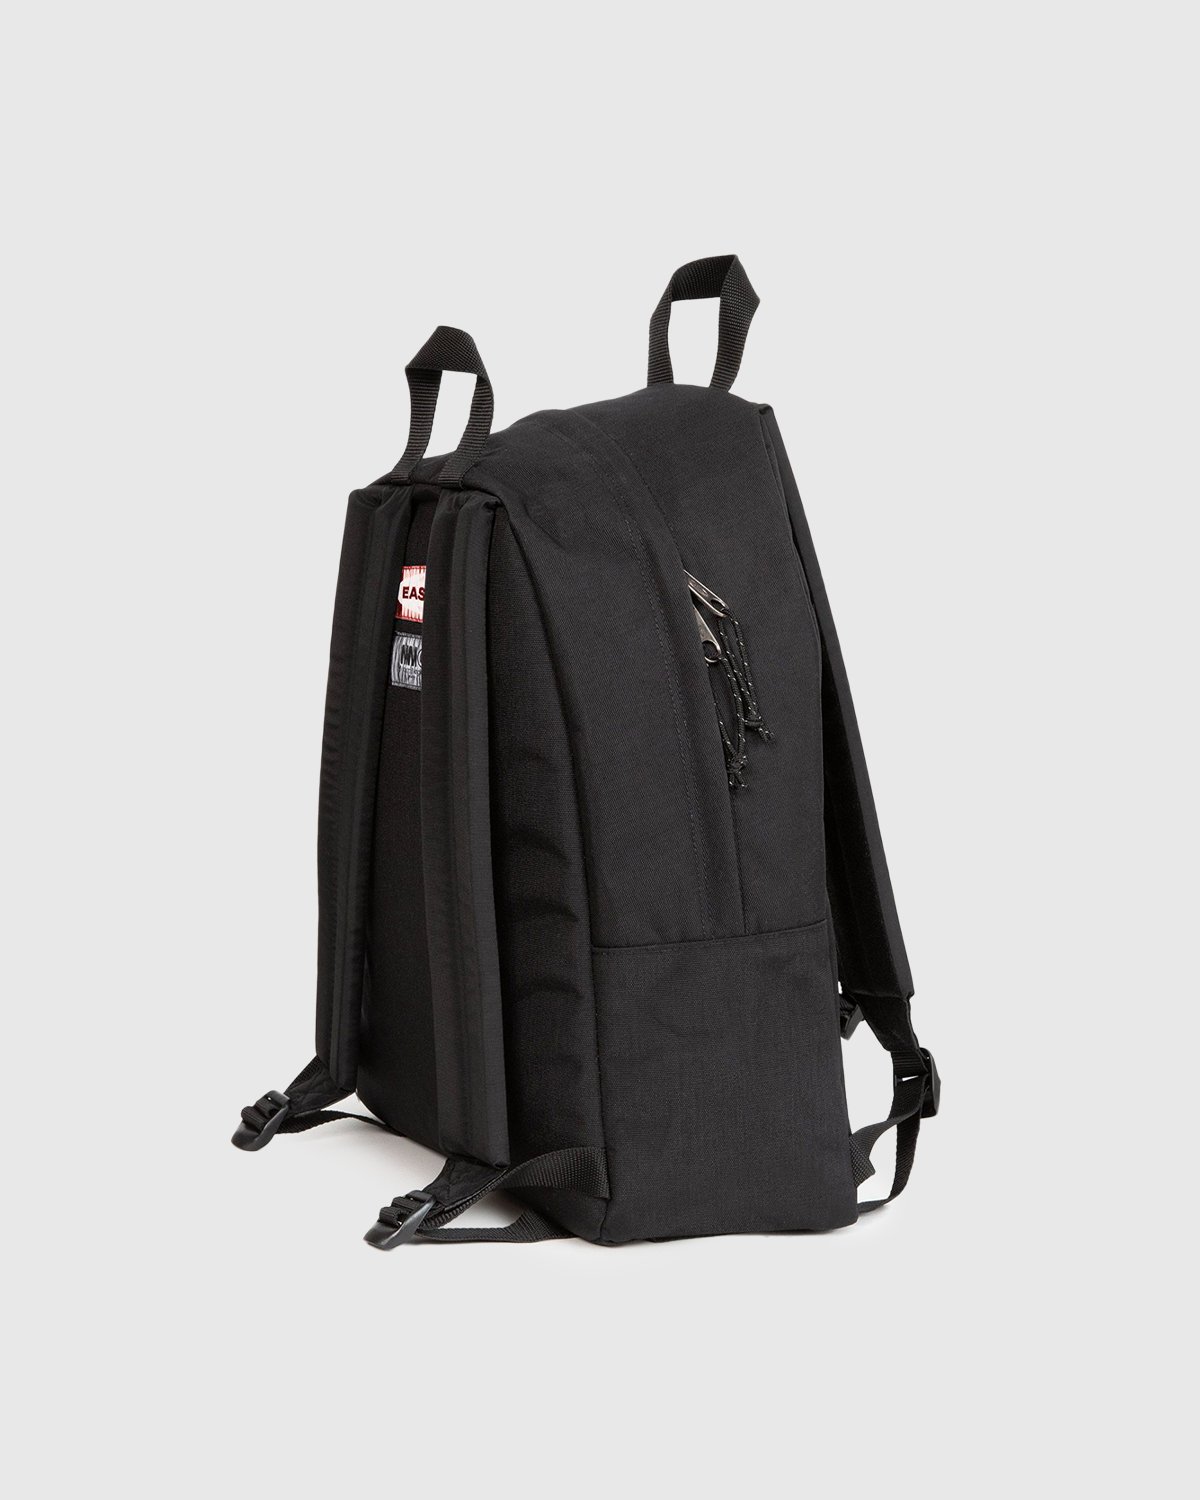 MM6 Maison Margiela x Eastpak - Padded XL Backpack Black - Accessories - Black - Image 2